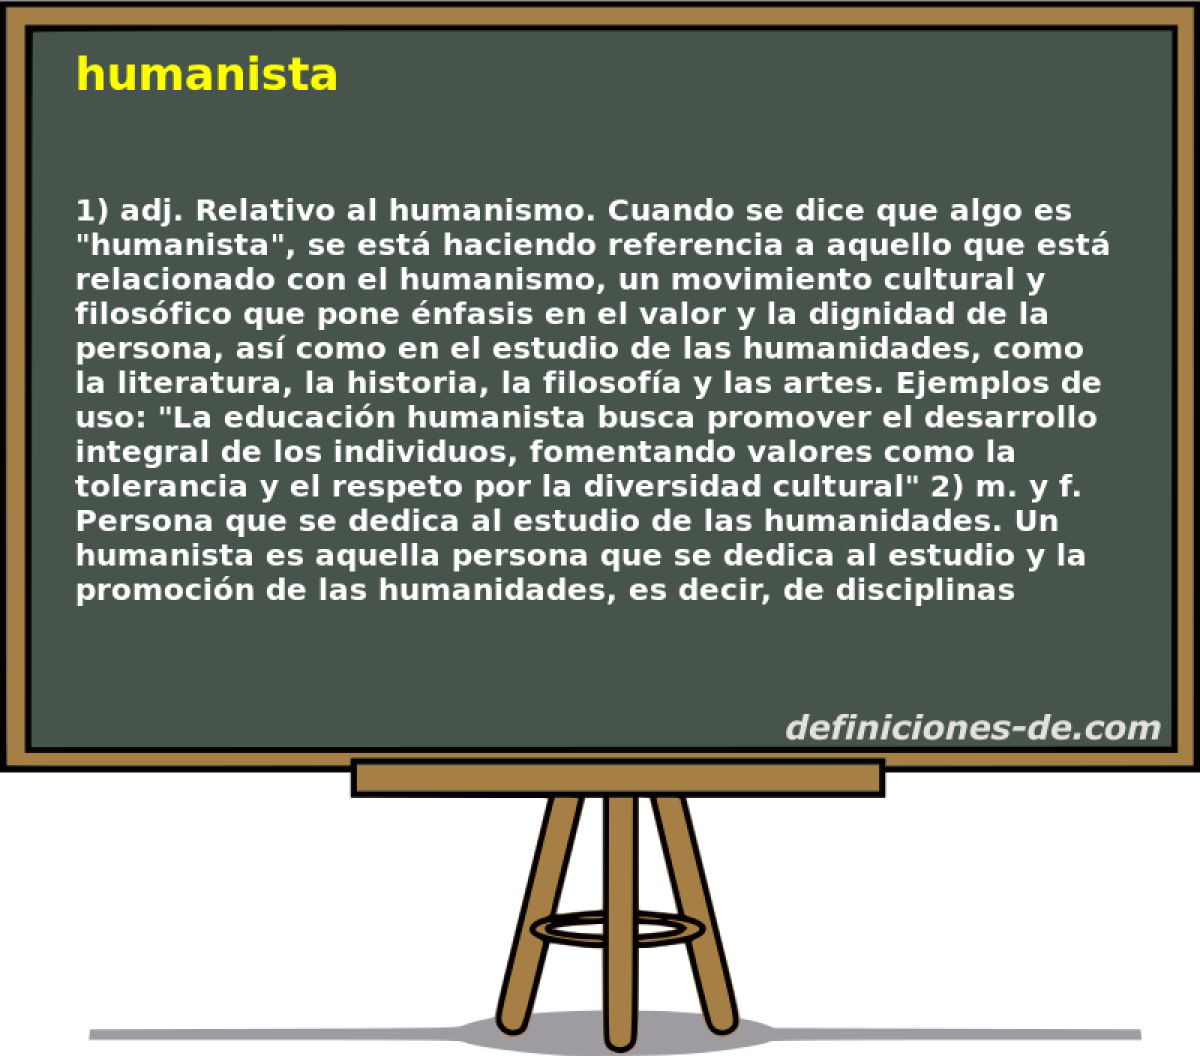 humanista 